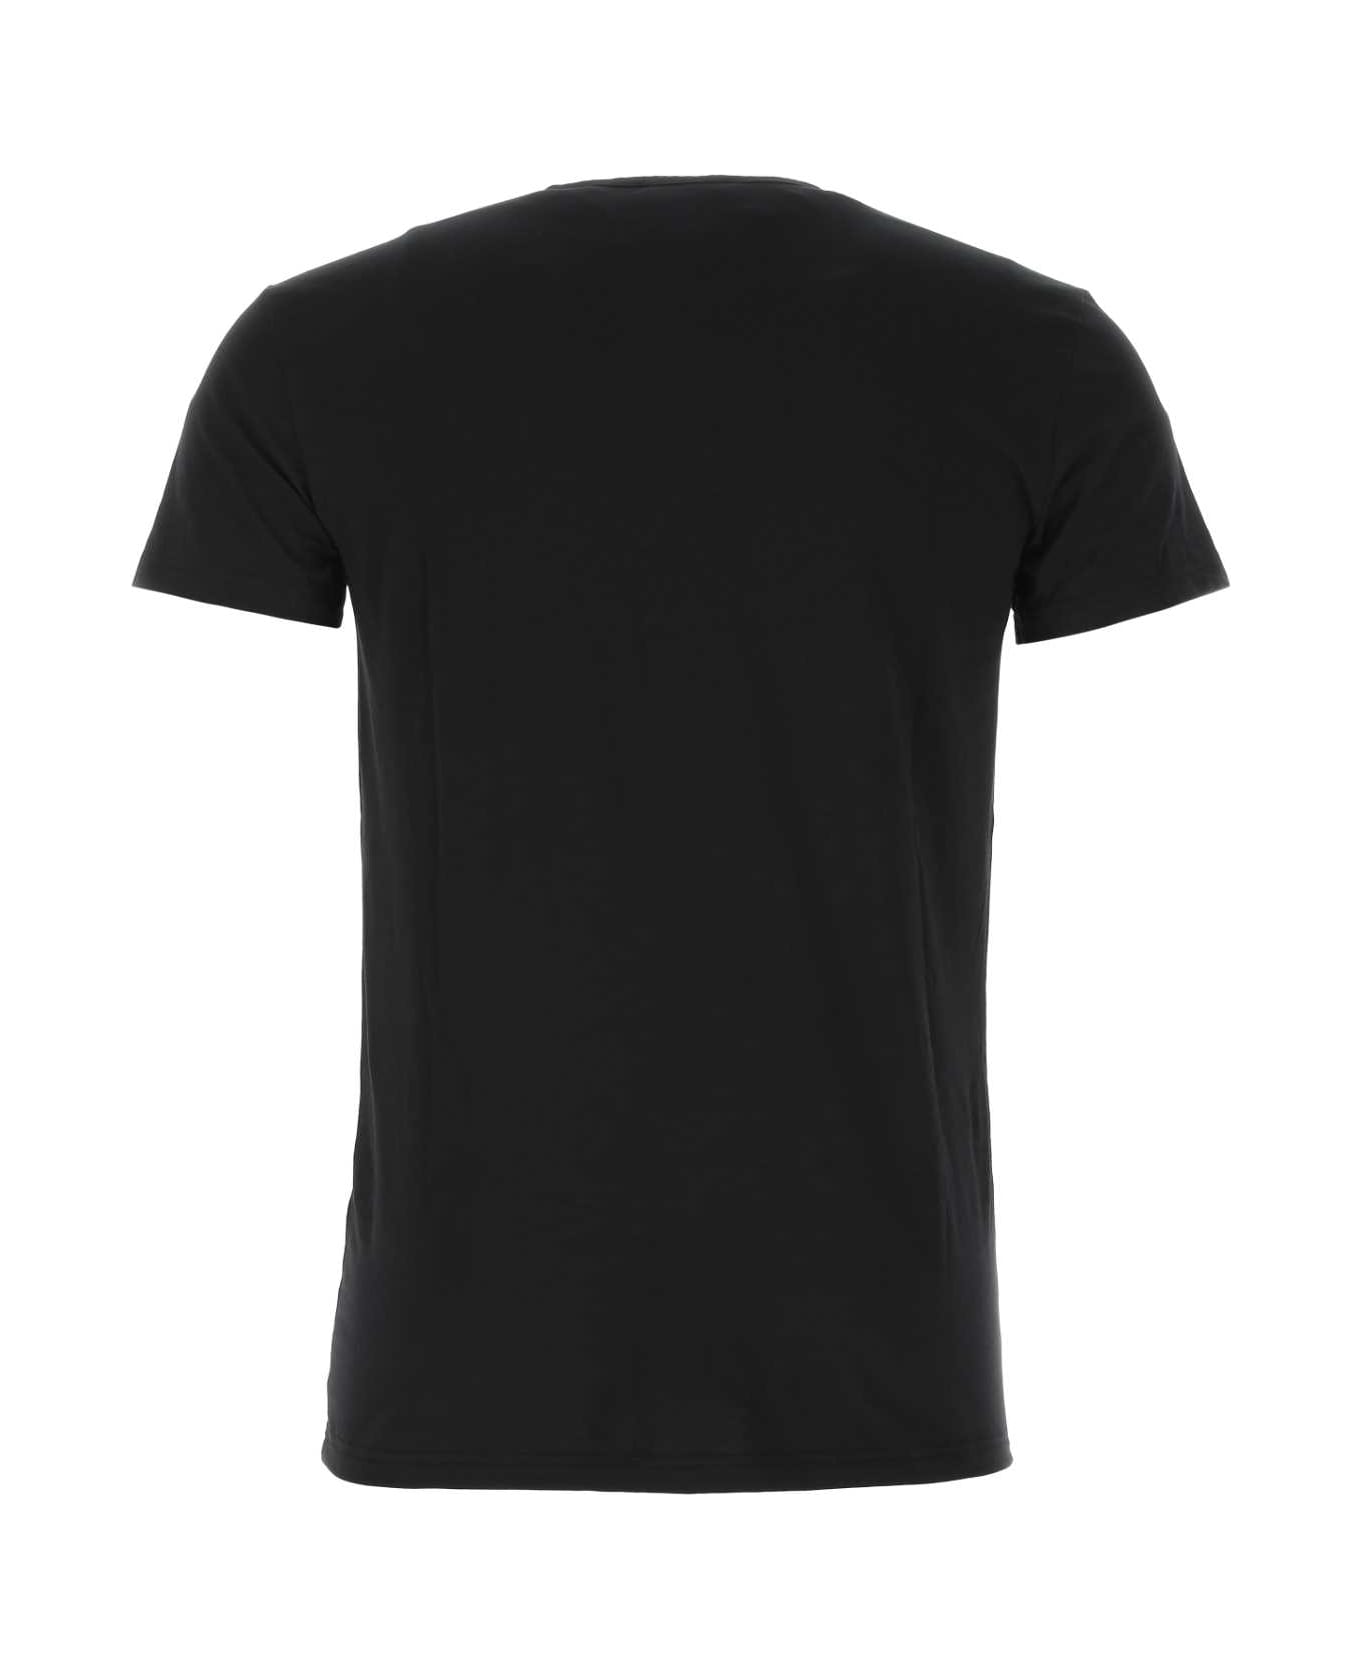 Versace Black Stretch Cotton T-shirt - A1008